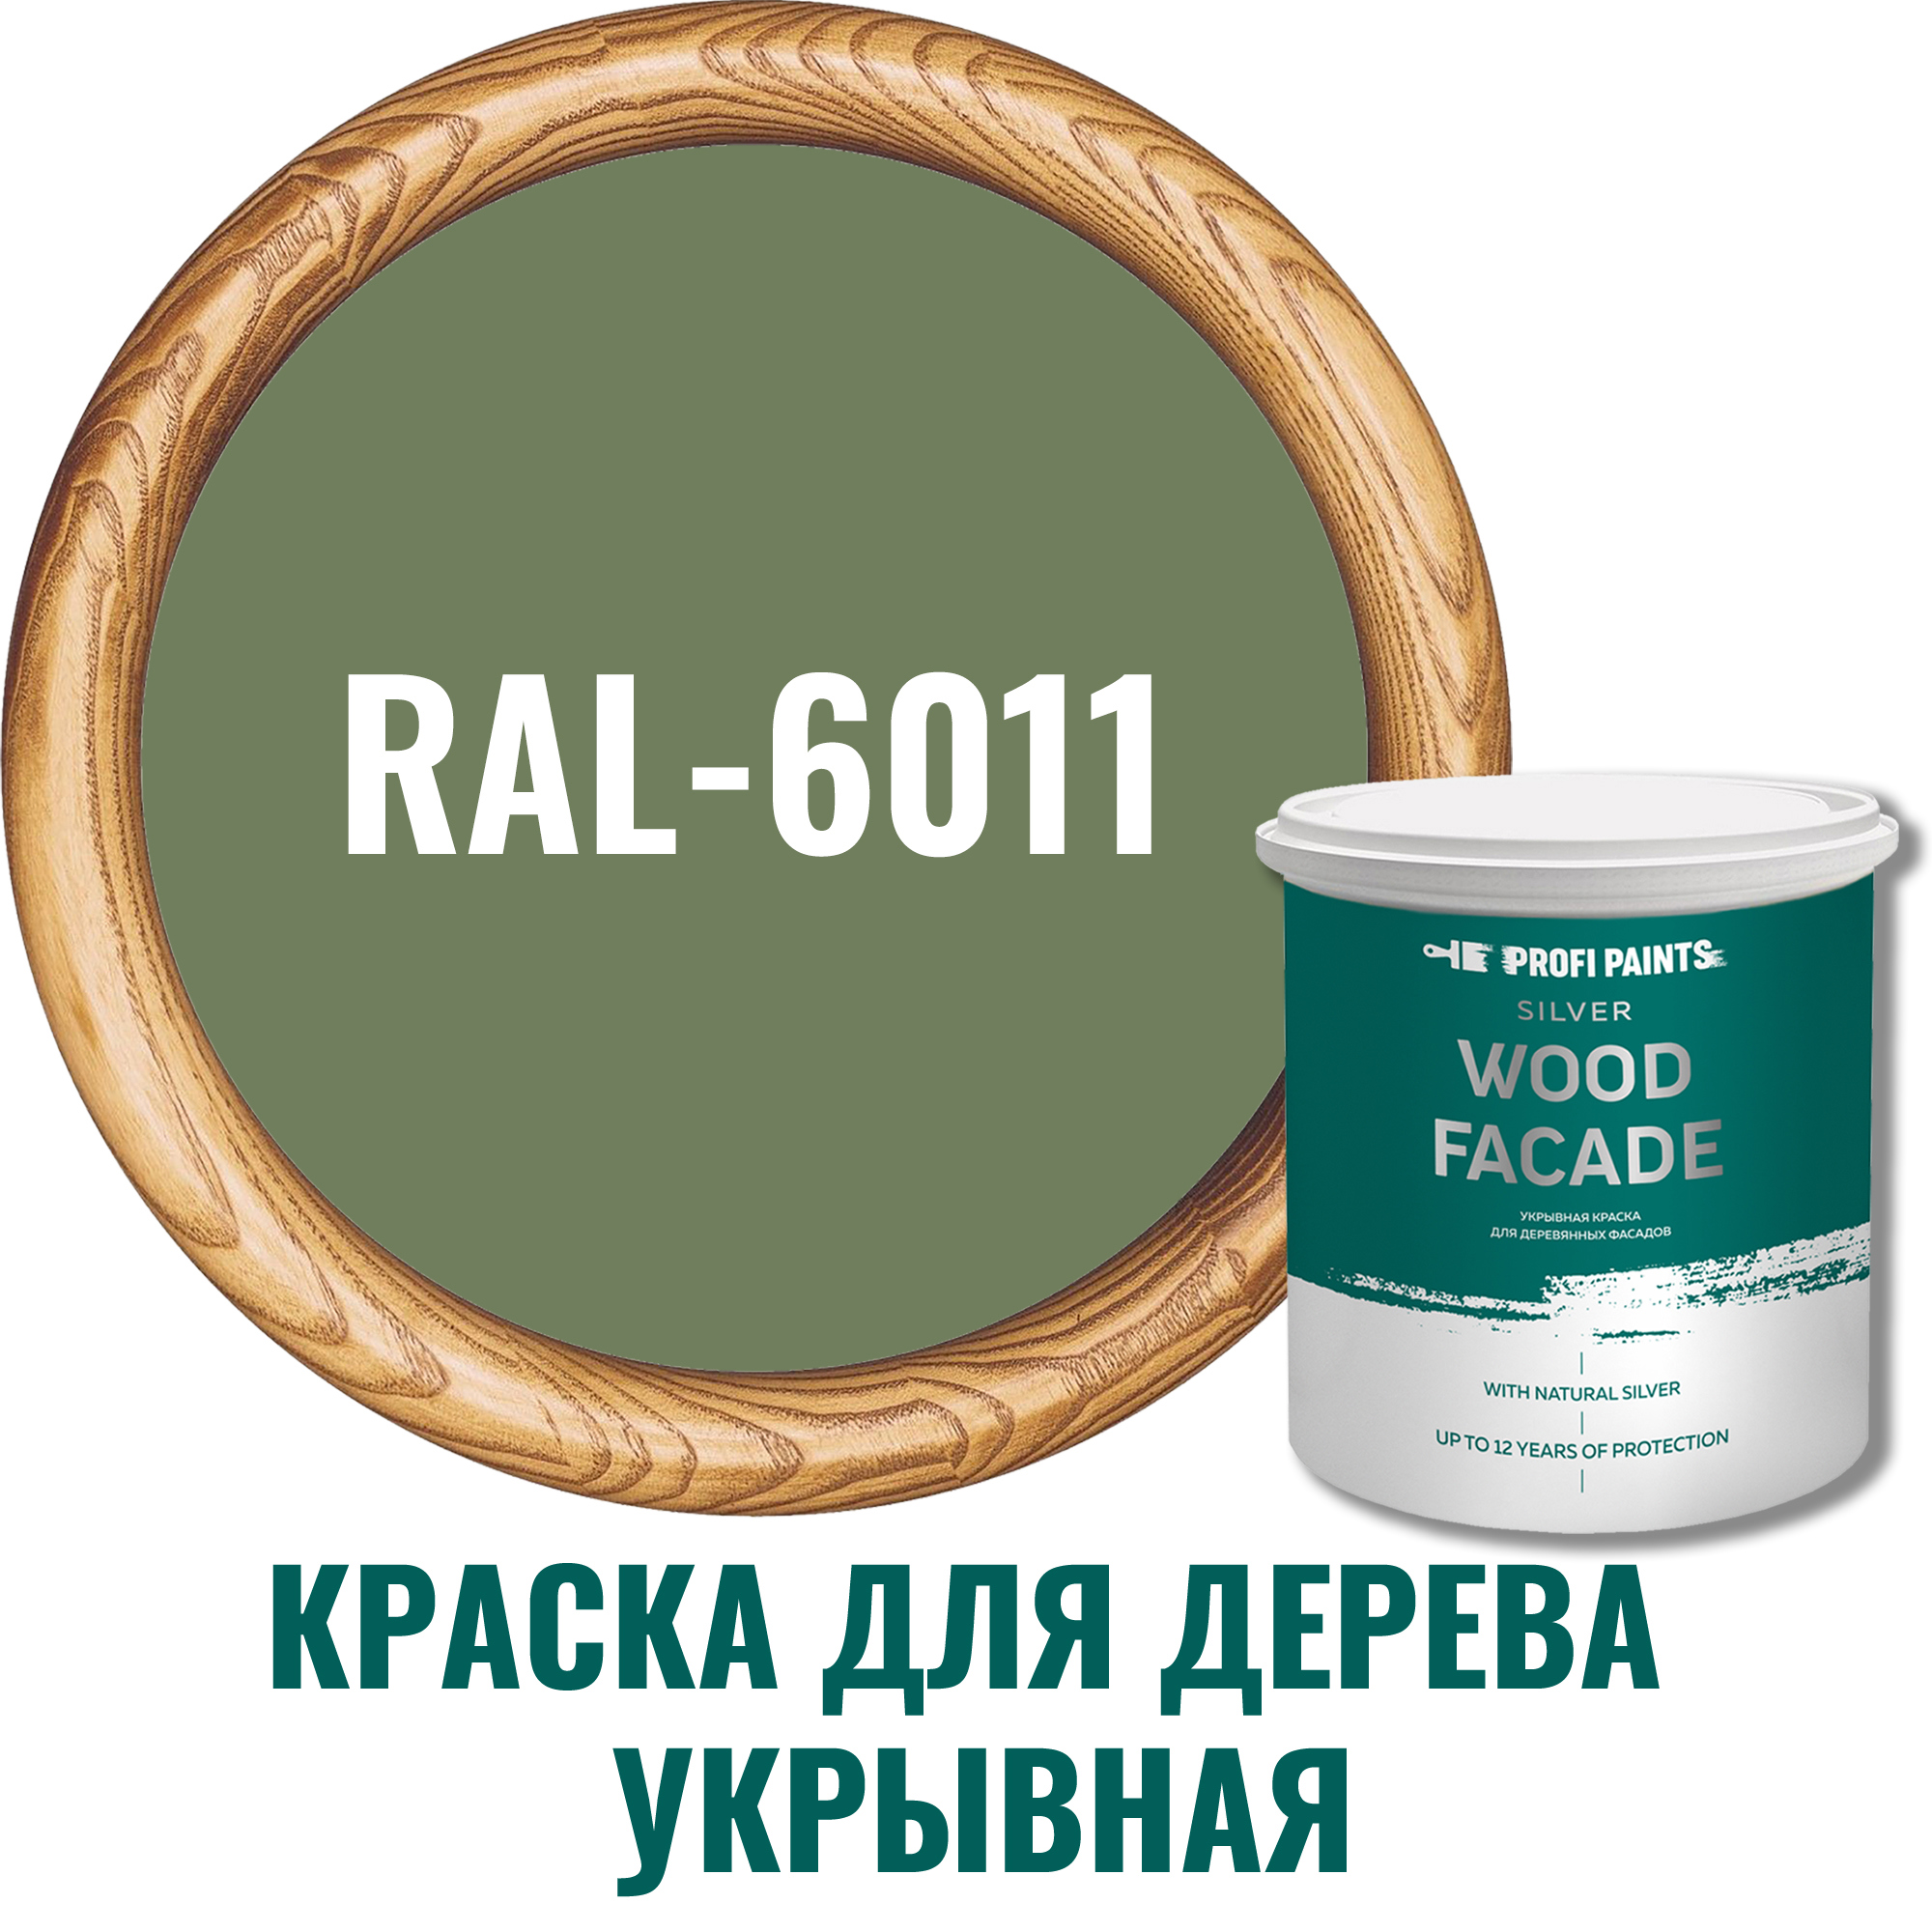 91106606 Краска для дерева 11246_D SILVER WOOD FASADE цвет RAL-6011 зелено-серый 9 л STLM-0487601 PROFIPAINTS